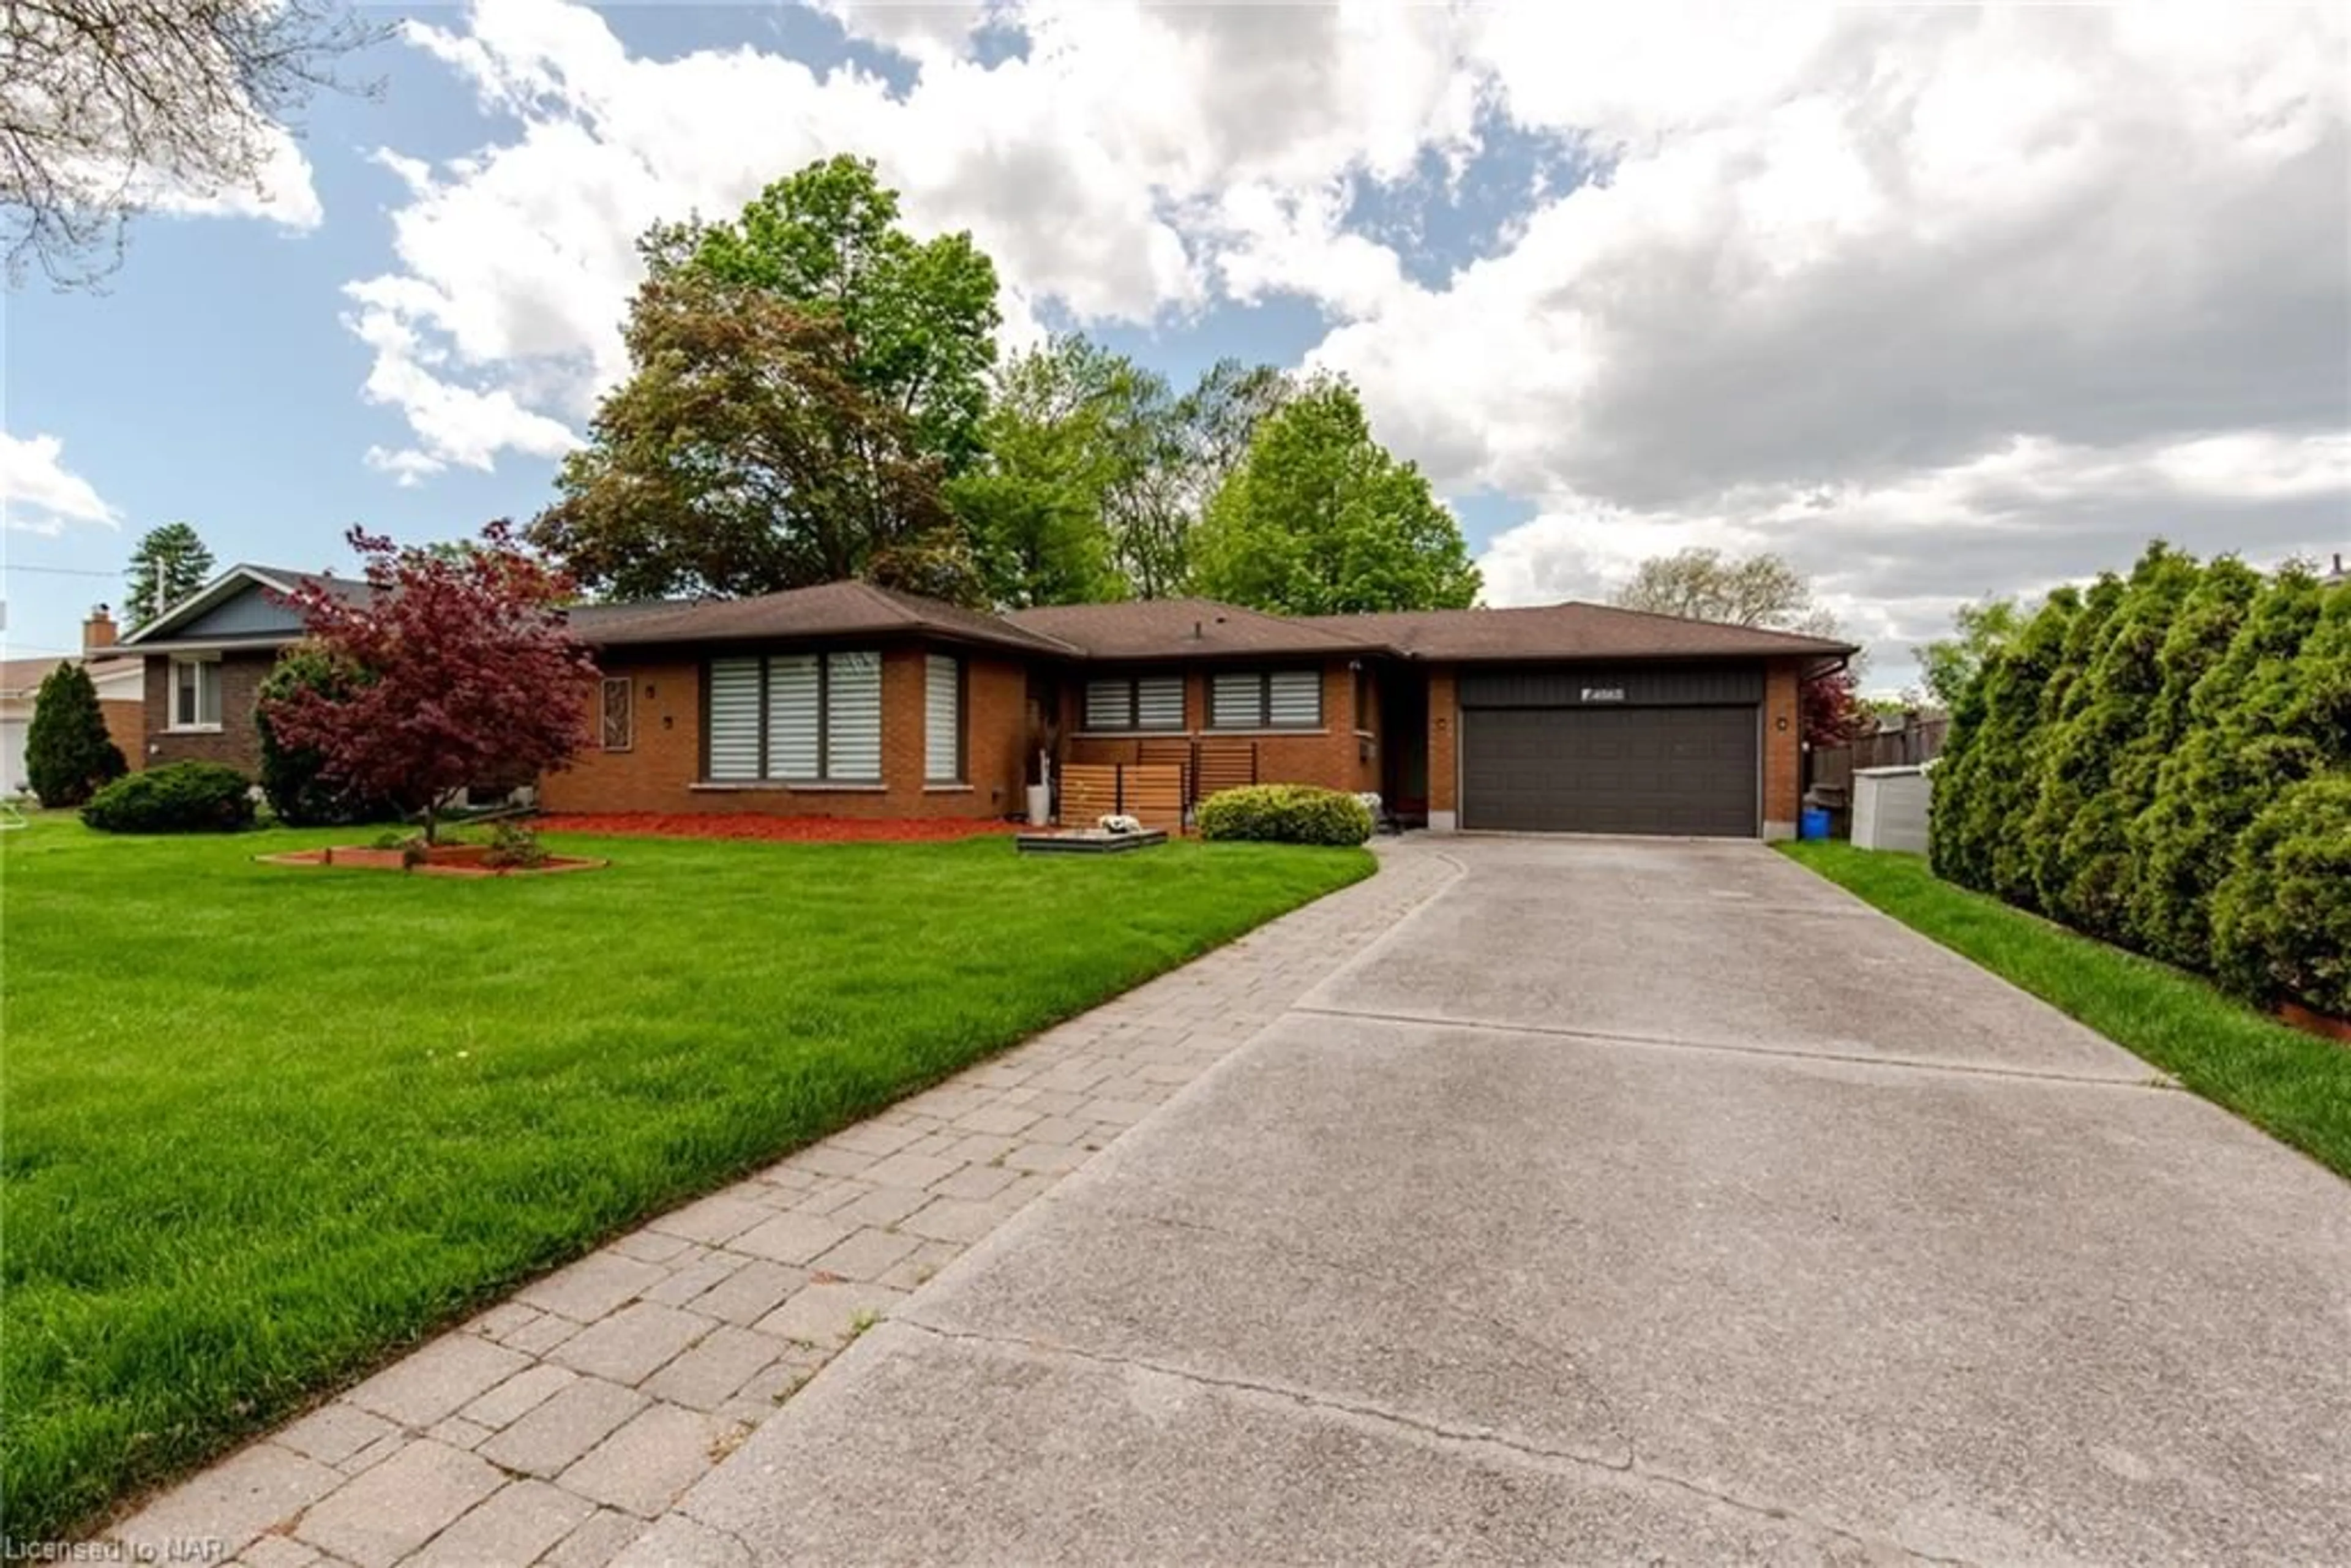 Home with brick exterior material for 4563 Pinedale Dr, Niagara Falls Ontario L2E 6M6